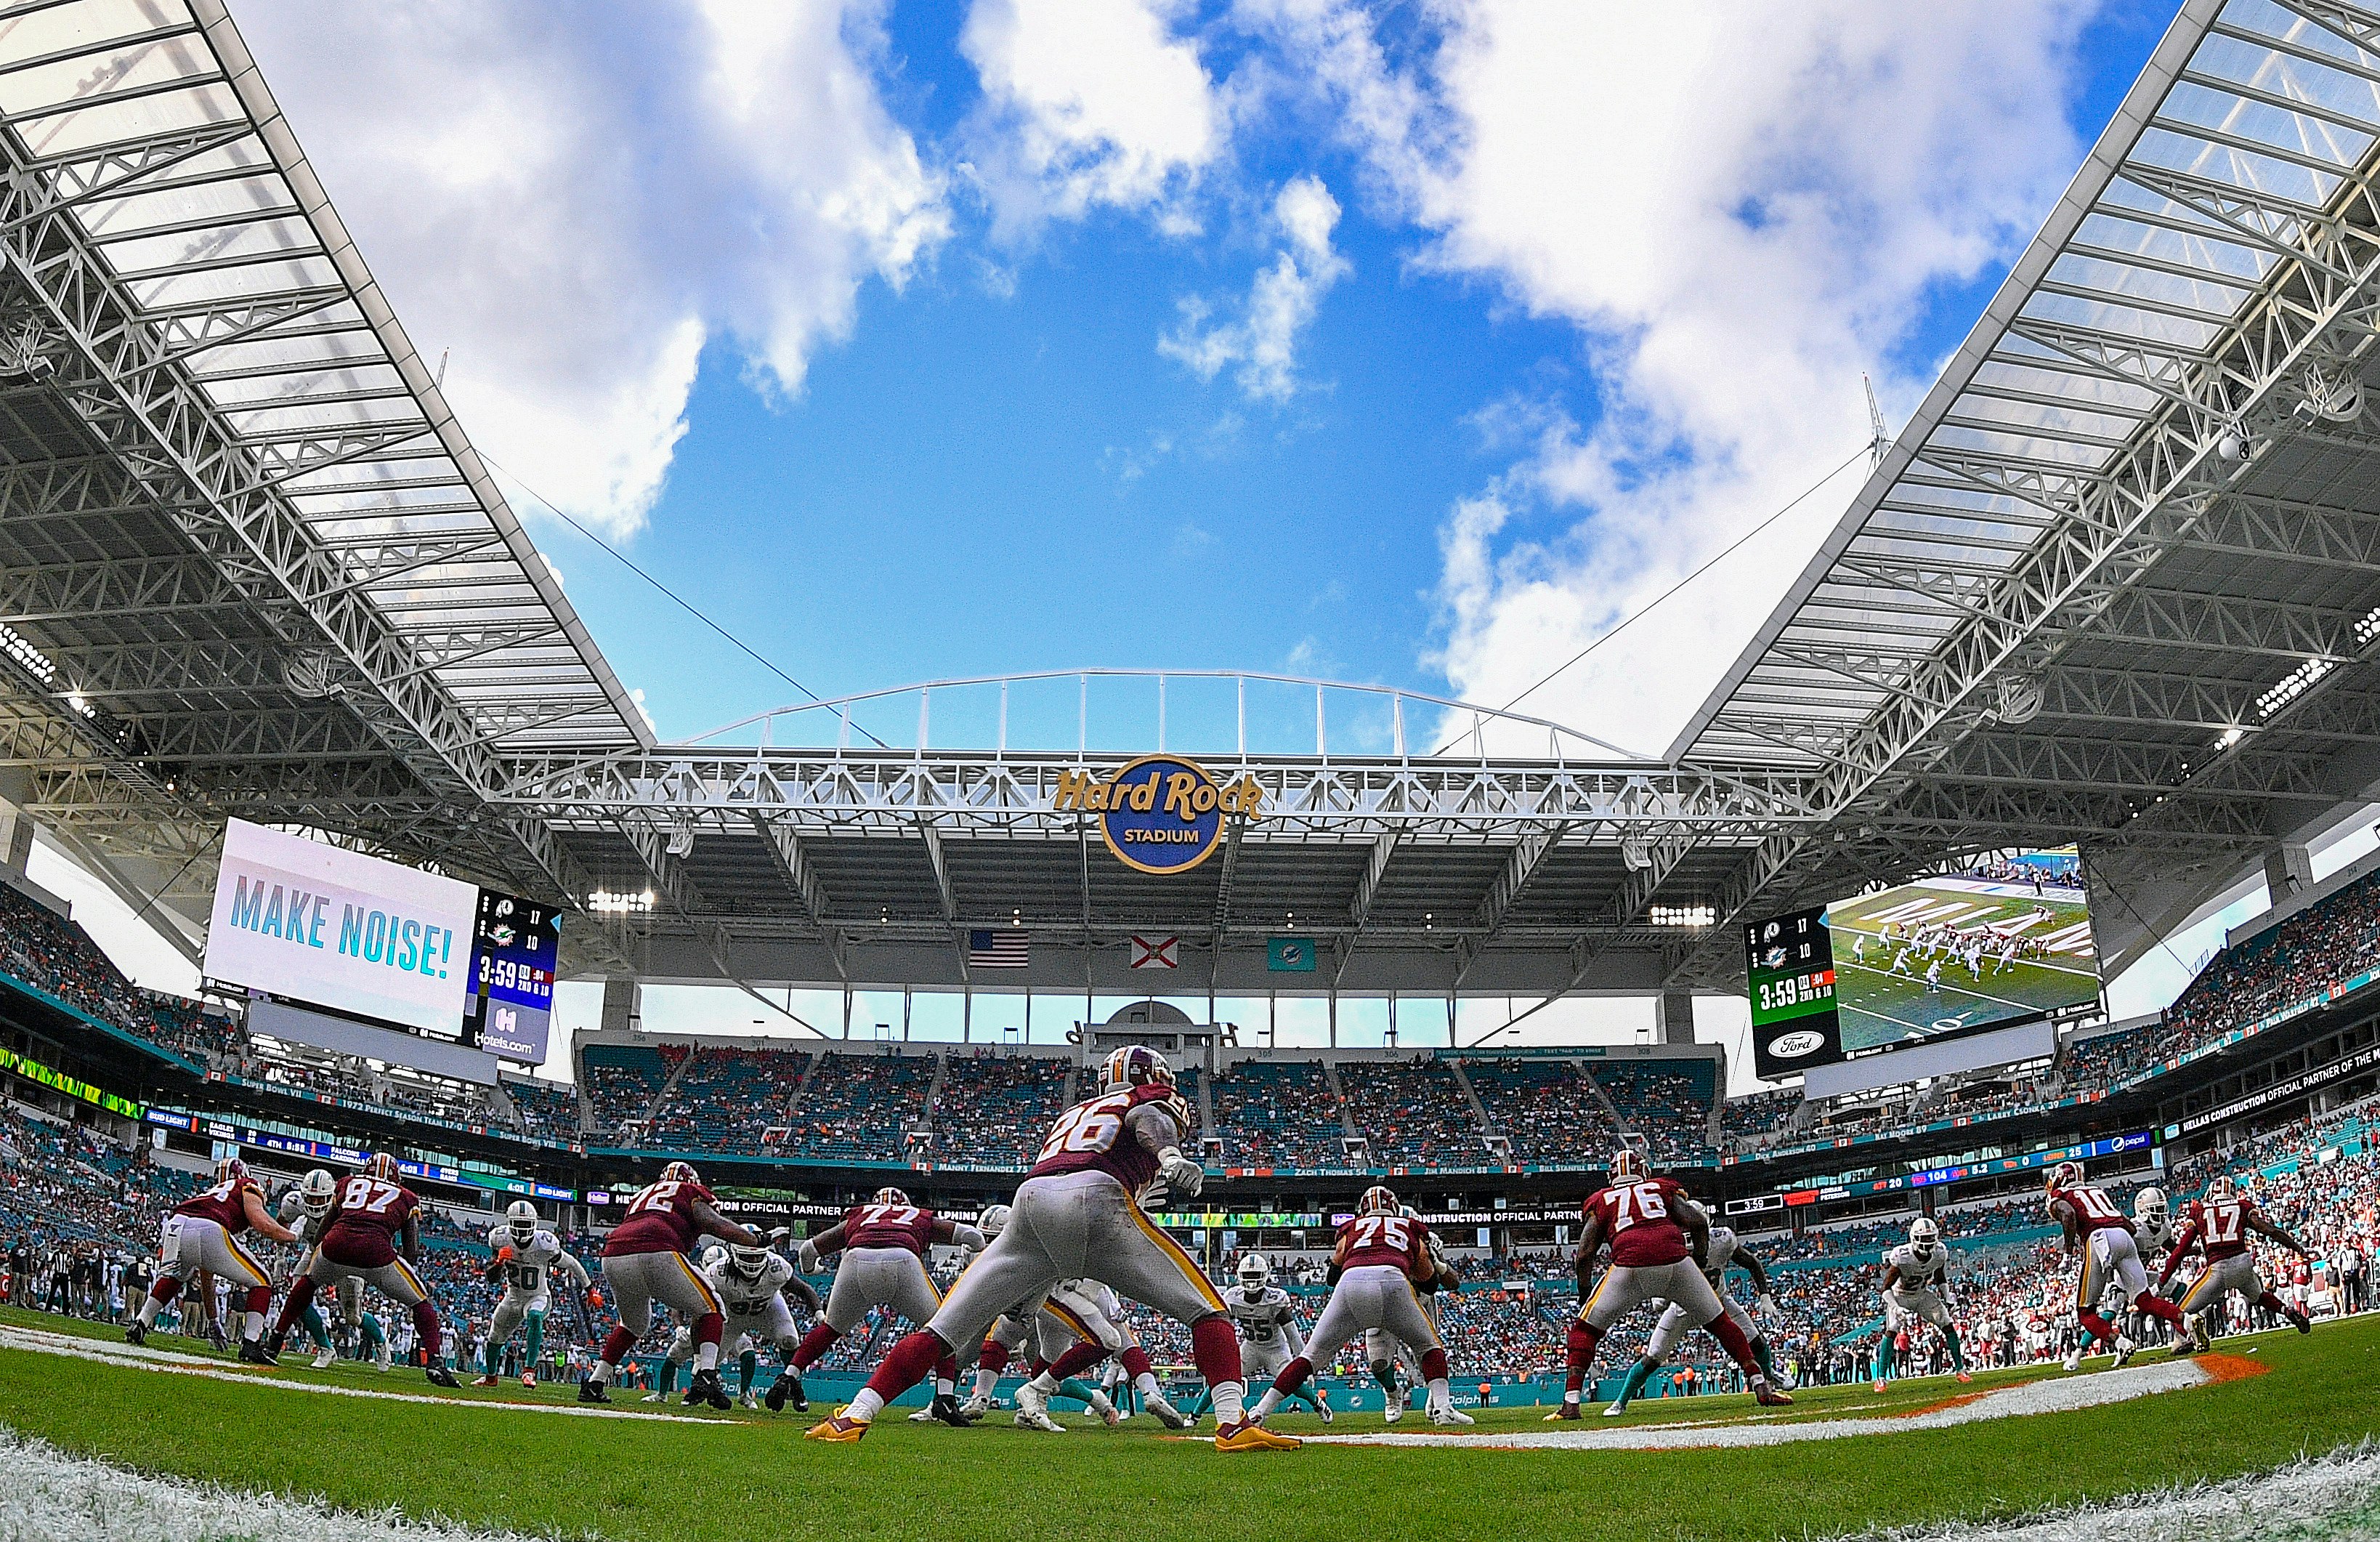 The Washington football team and the Miami Dolphins compete in Hard Rock Stadium near Miami